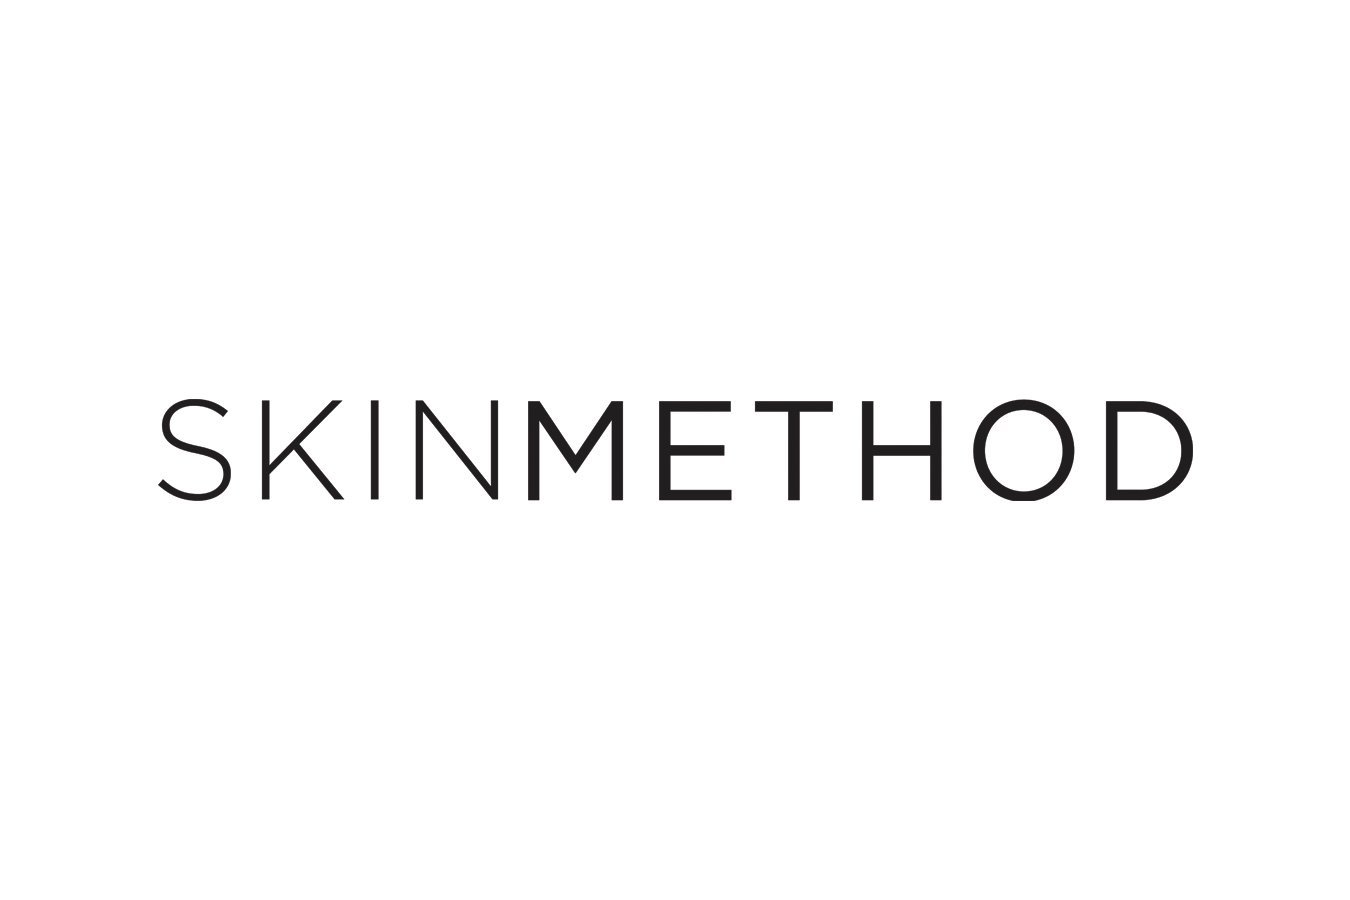 Skin Method Final - website-1